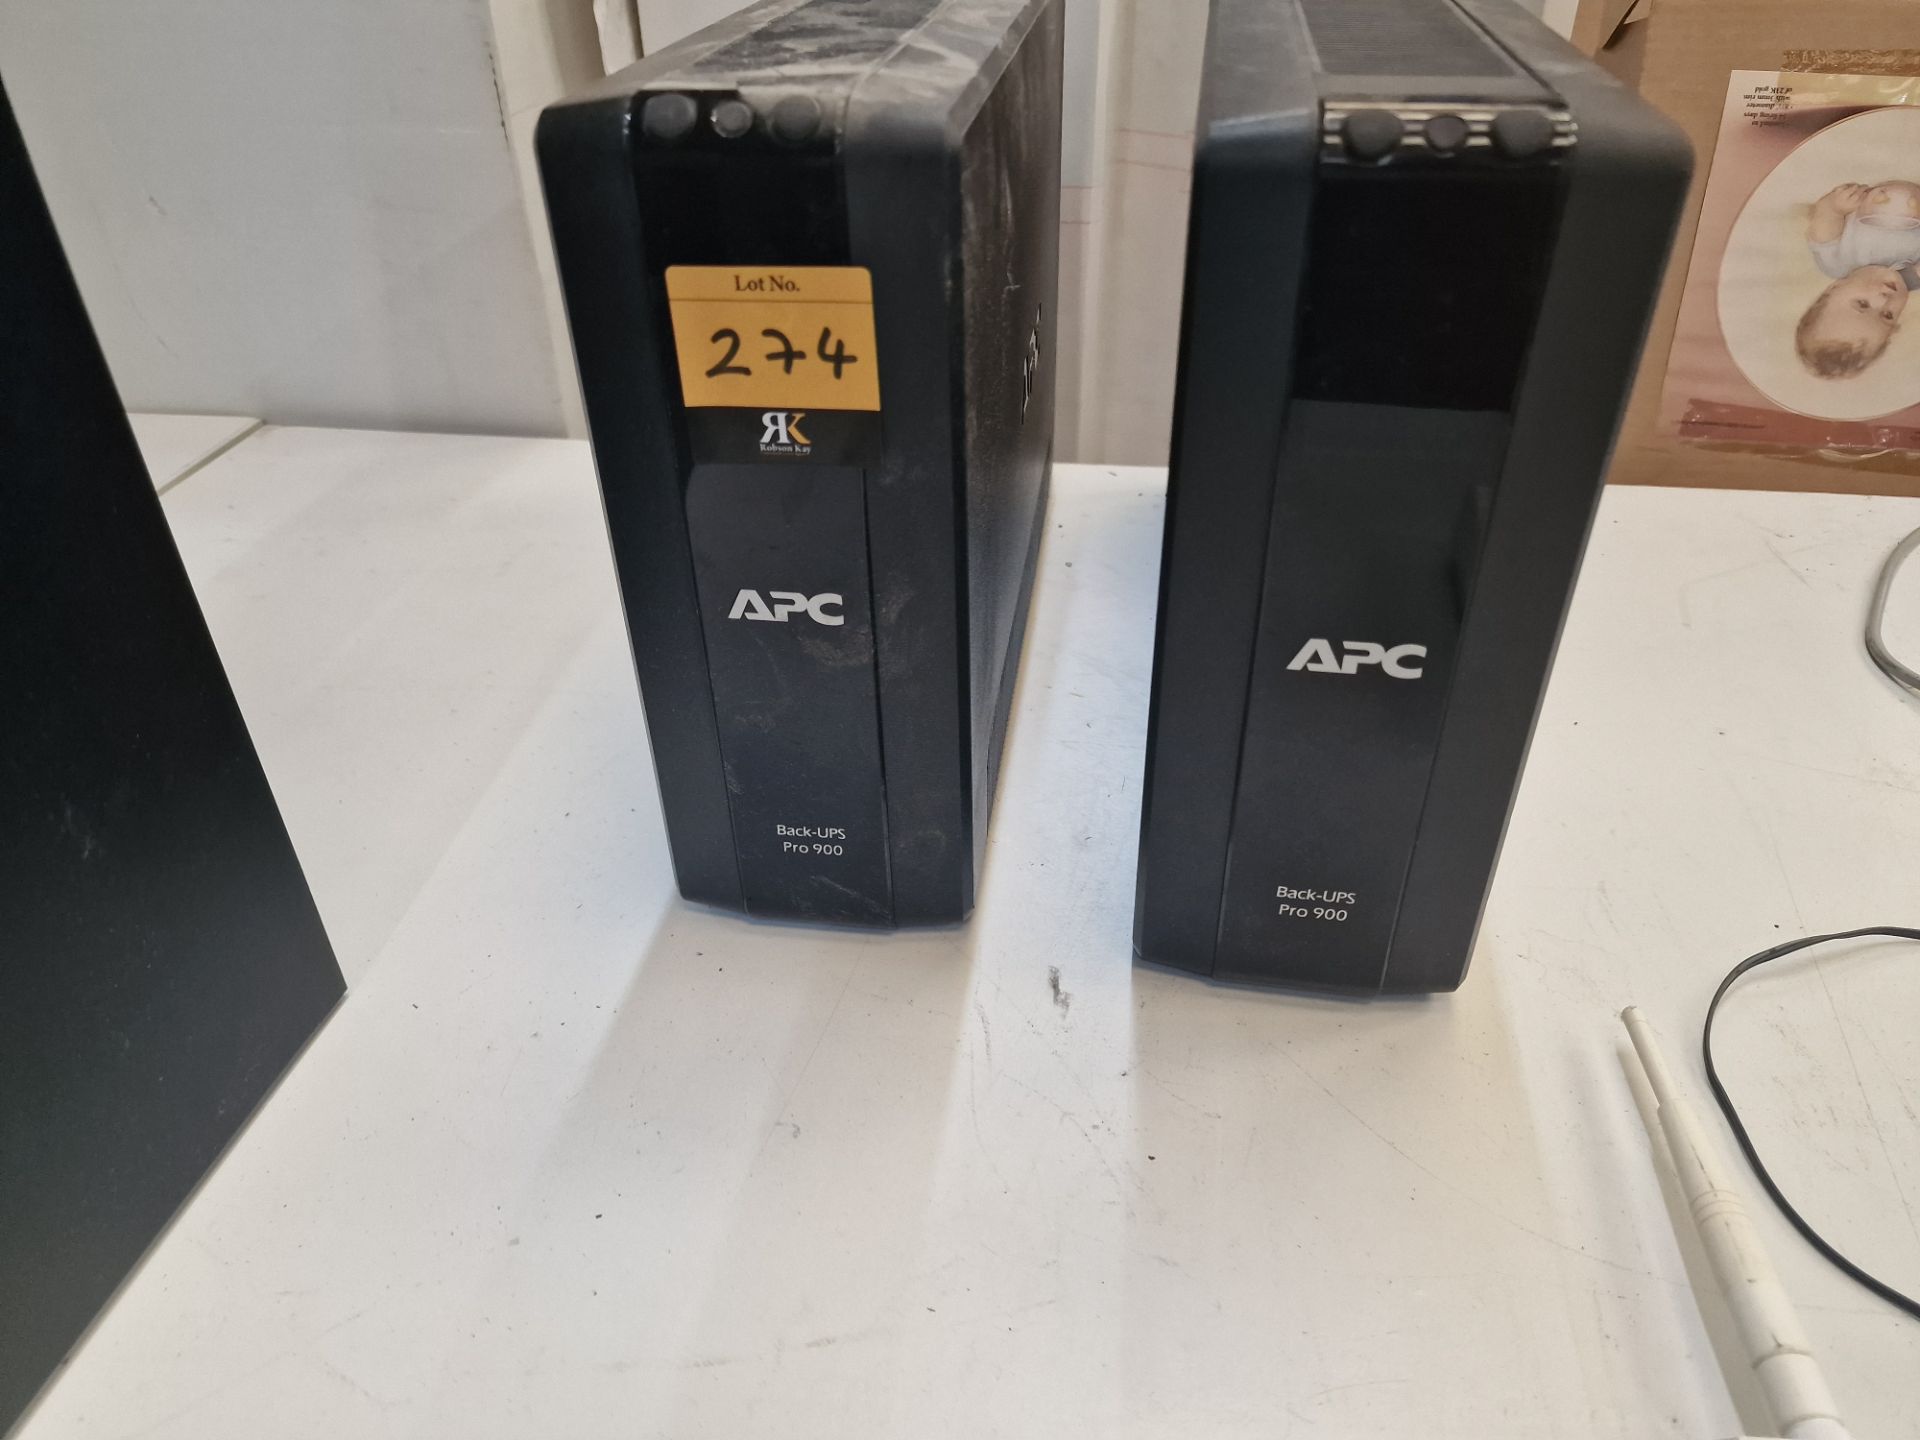 2 off APC Back-UP Pro 900 battery back-ups - Image 3 of 4